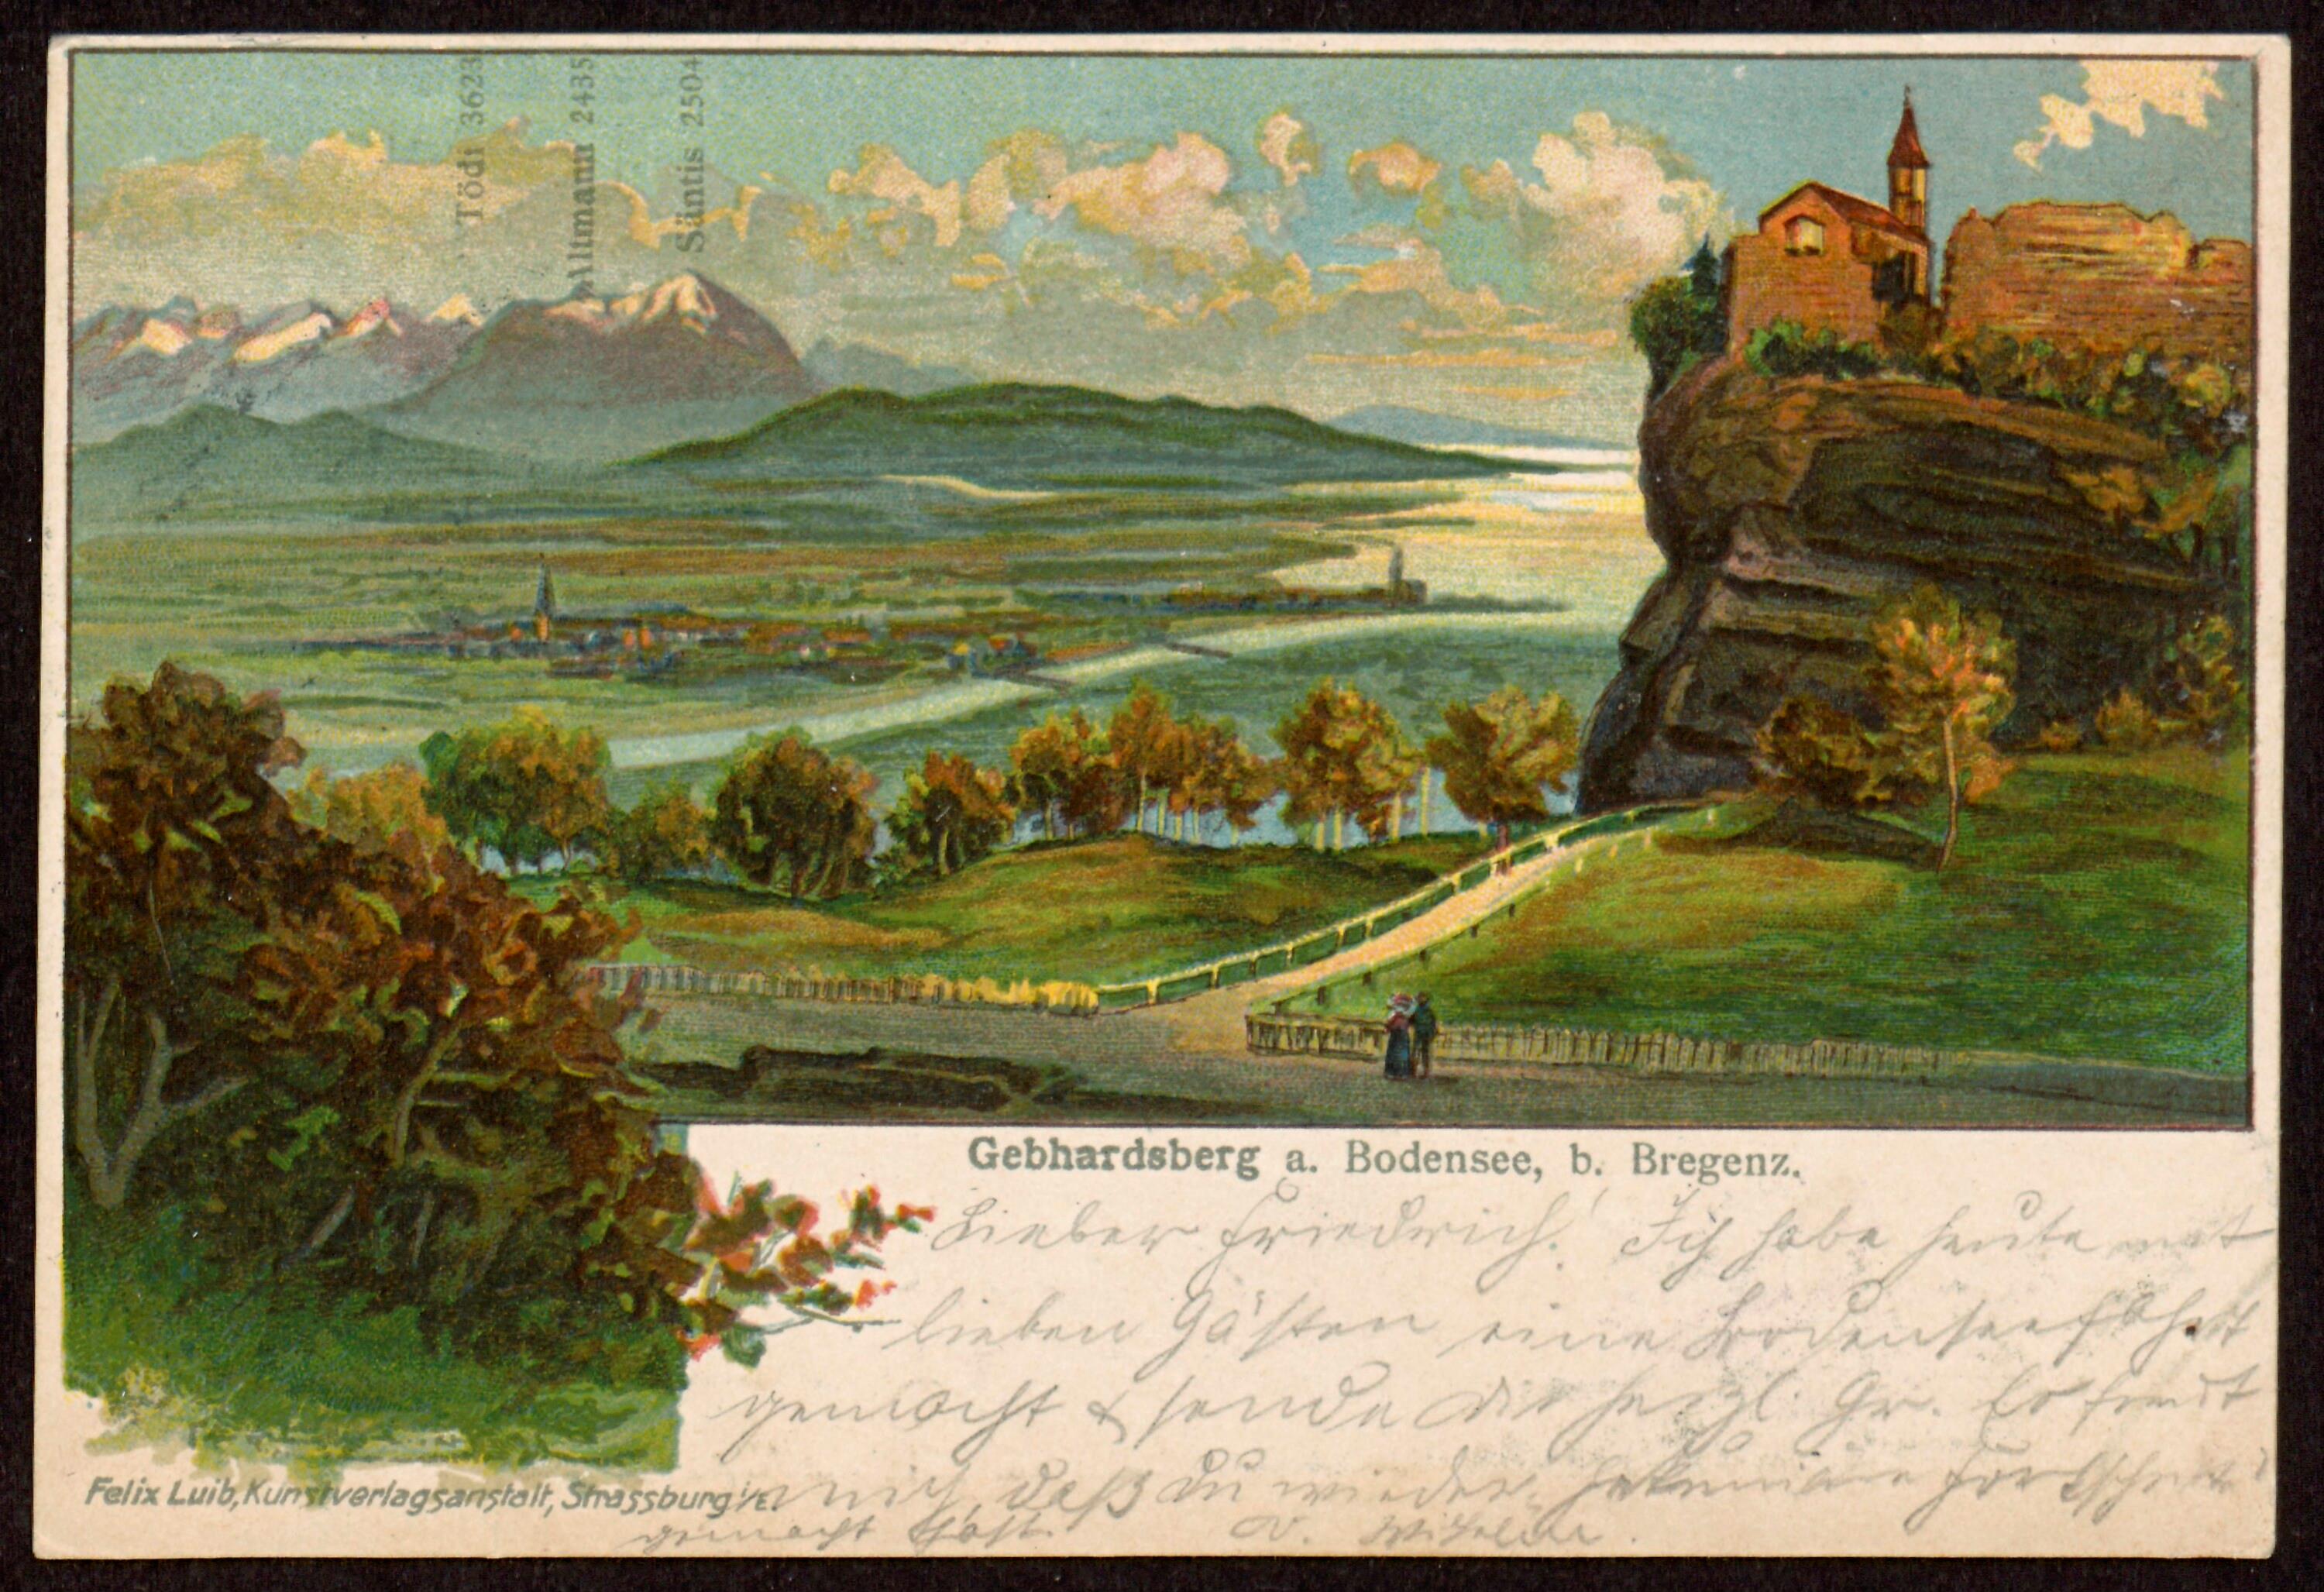 Gebhardsberg a. Bodensee, b. Bregenz></div>


    <hr>
    <div class=